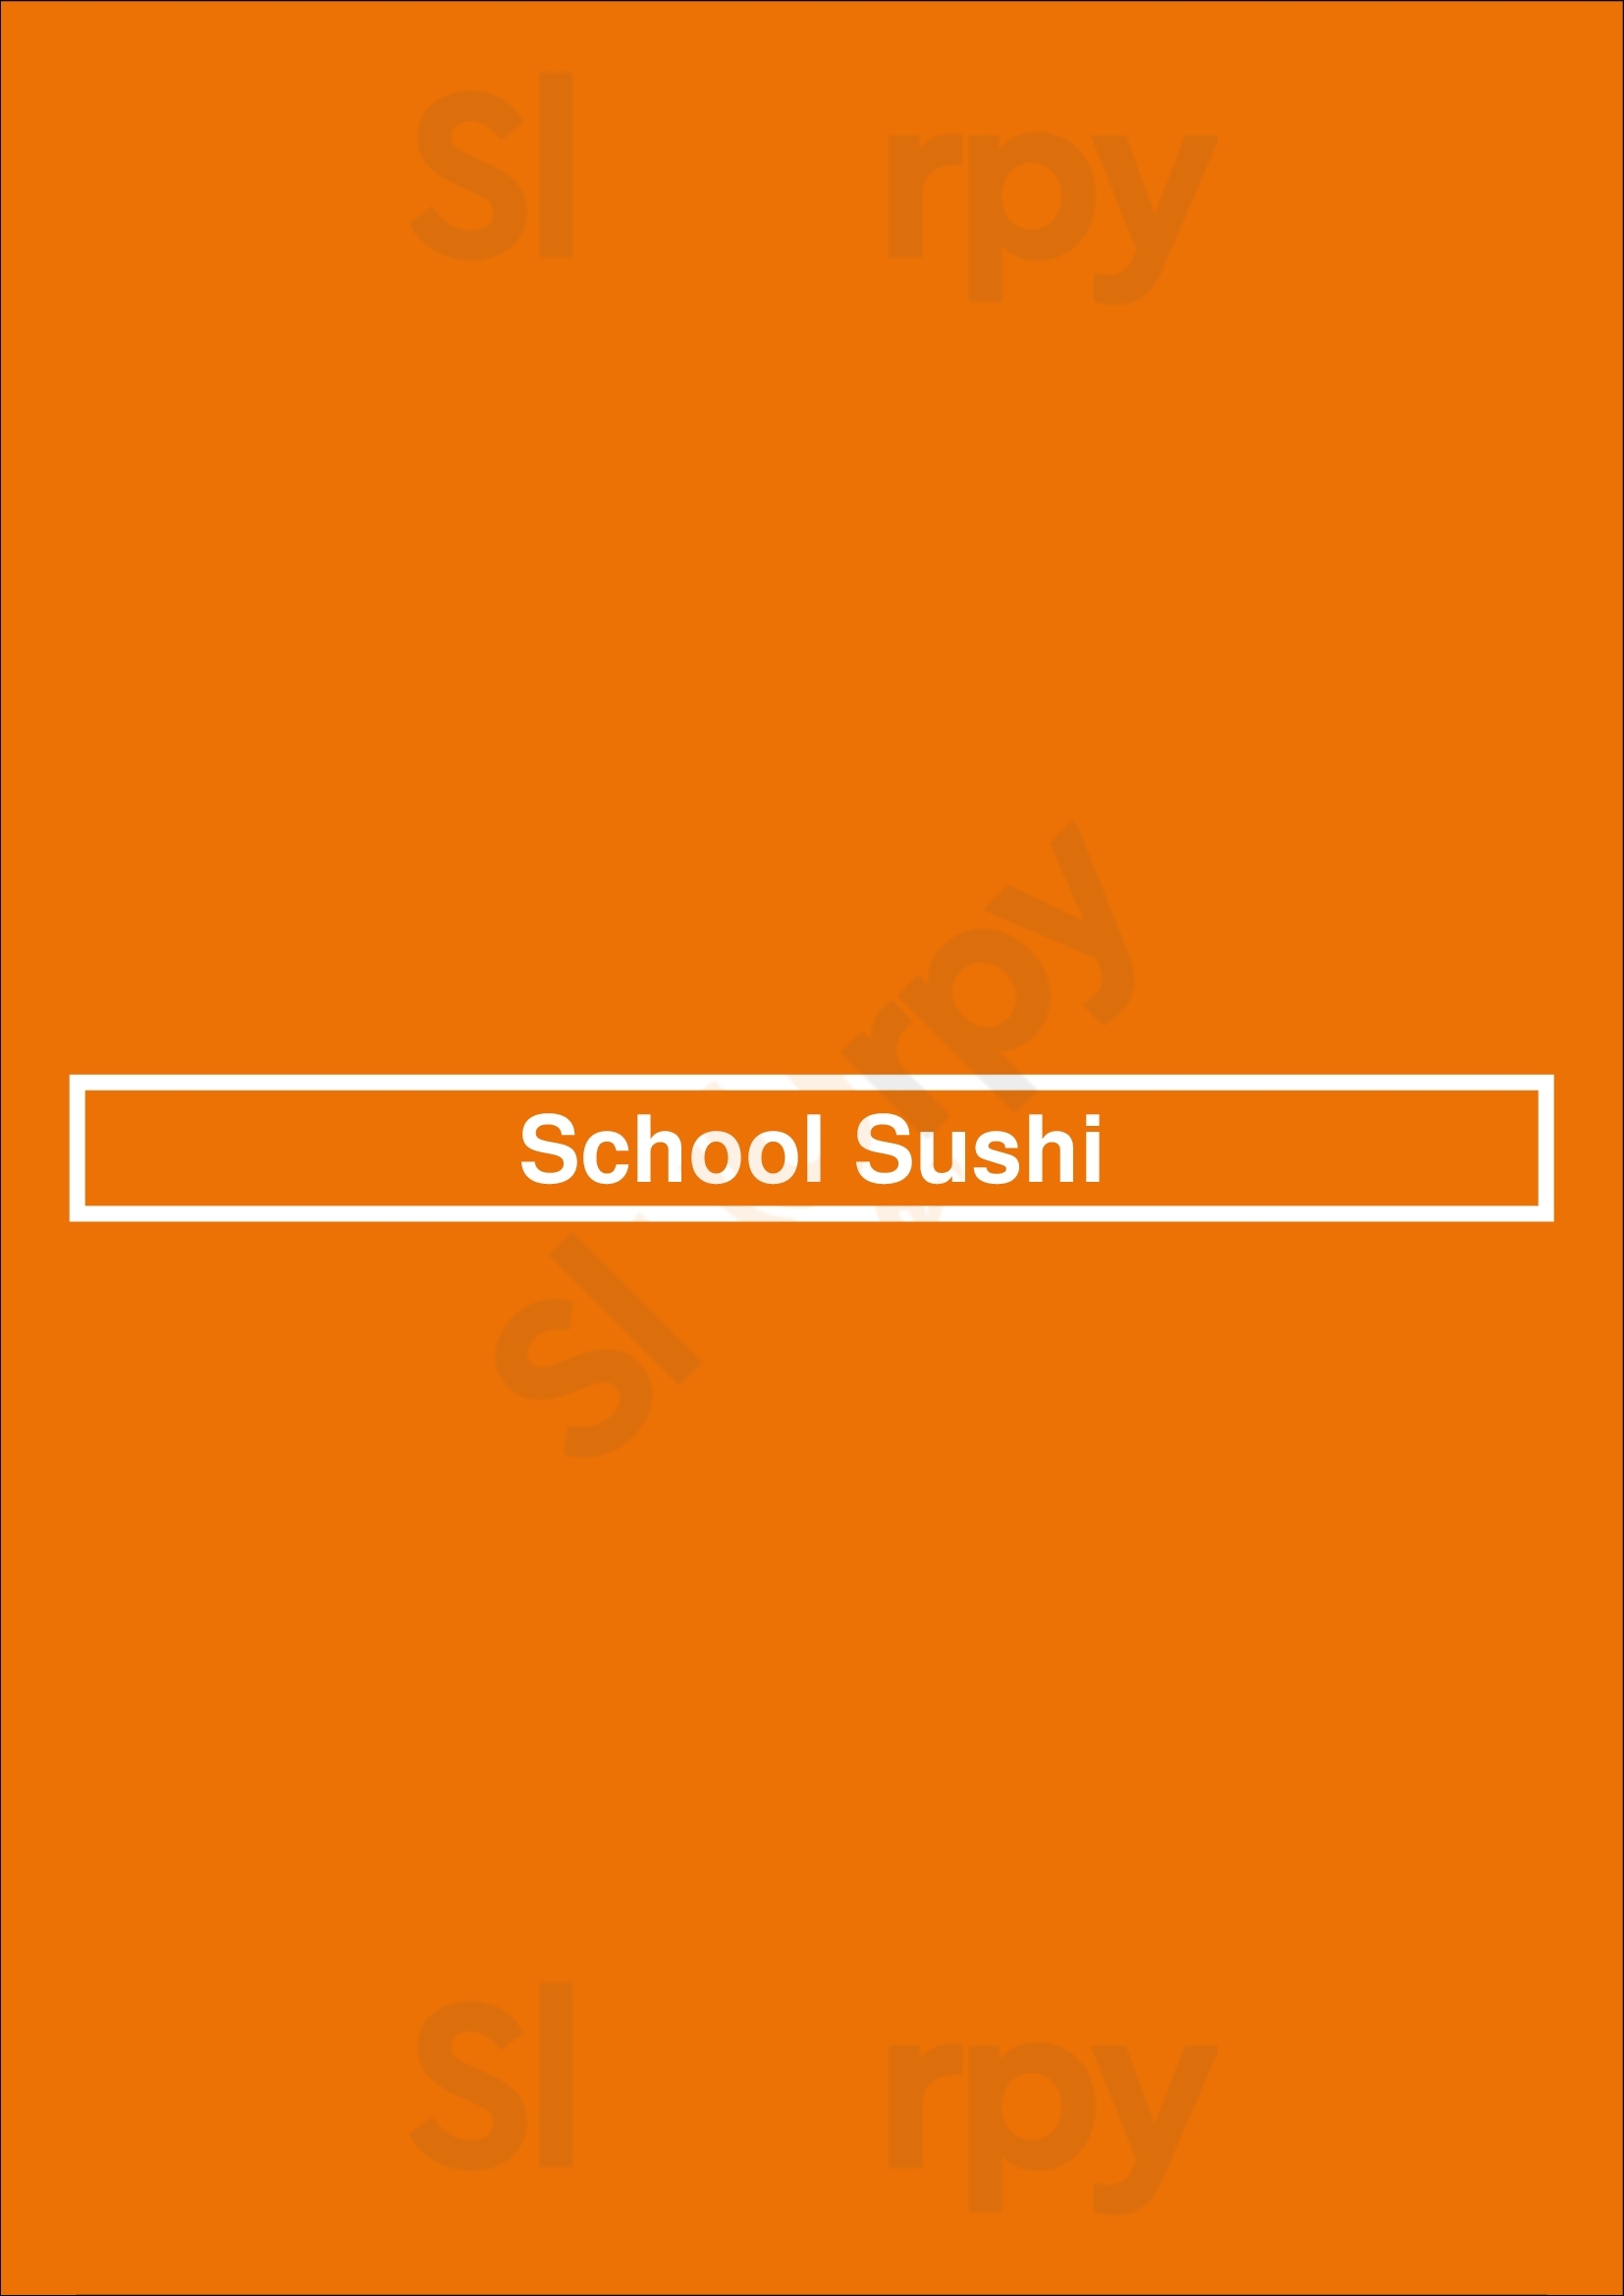 School Sushi Lexington Menu - 1